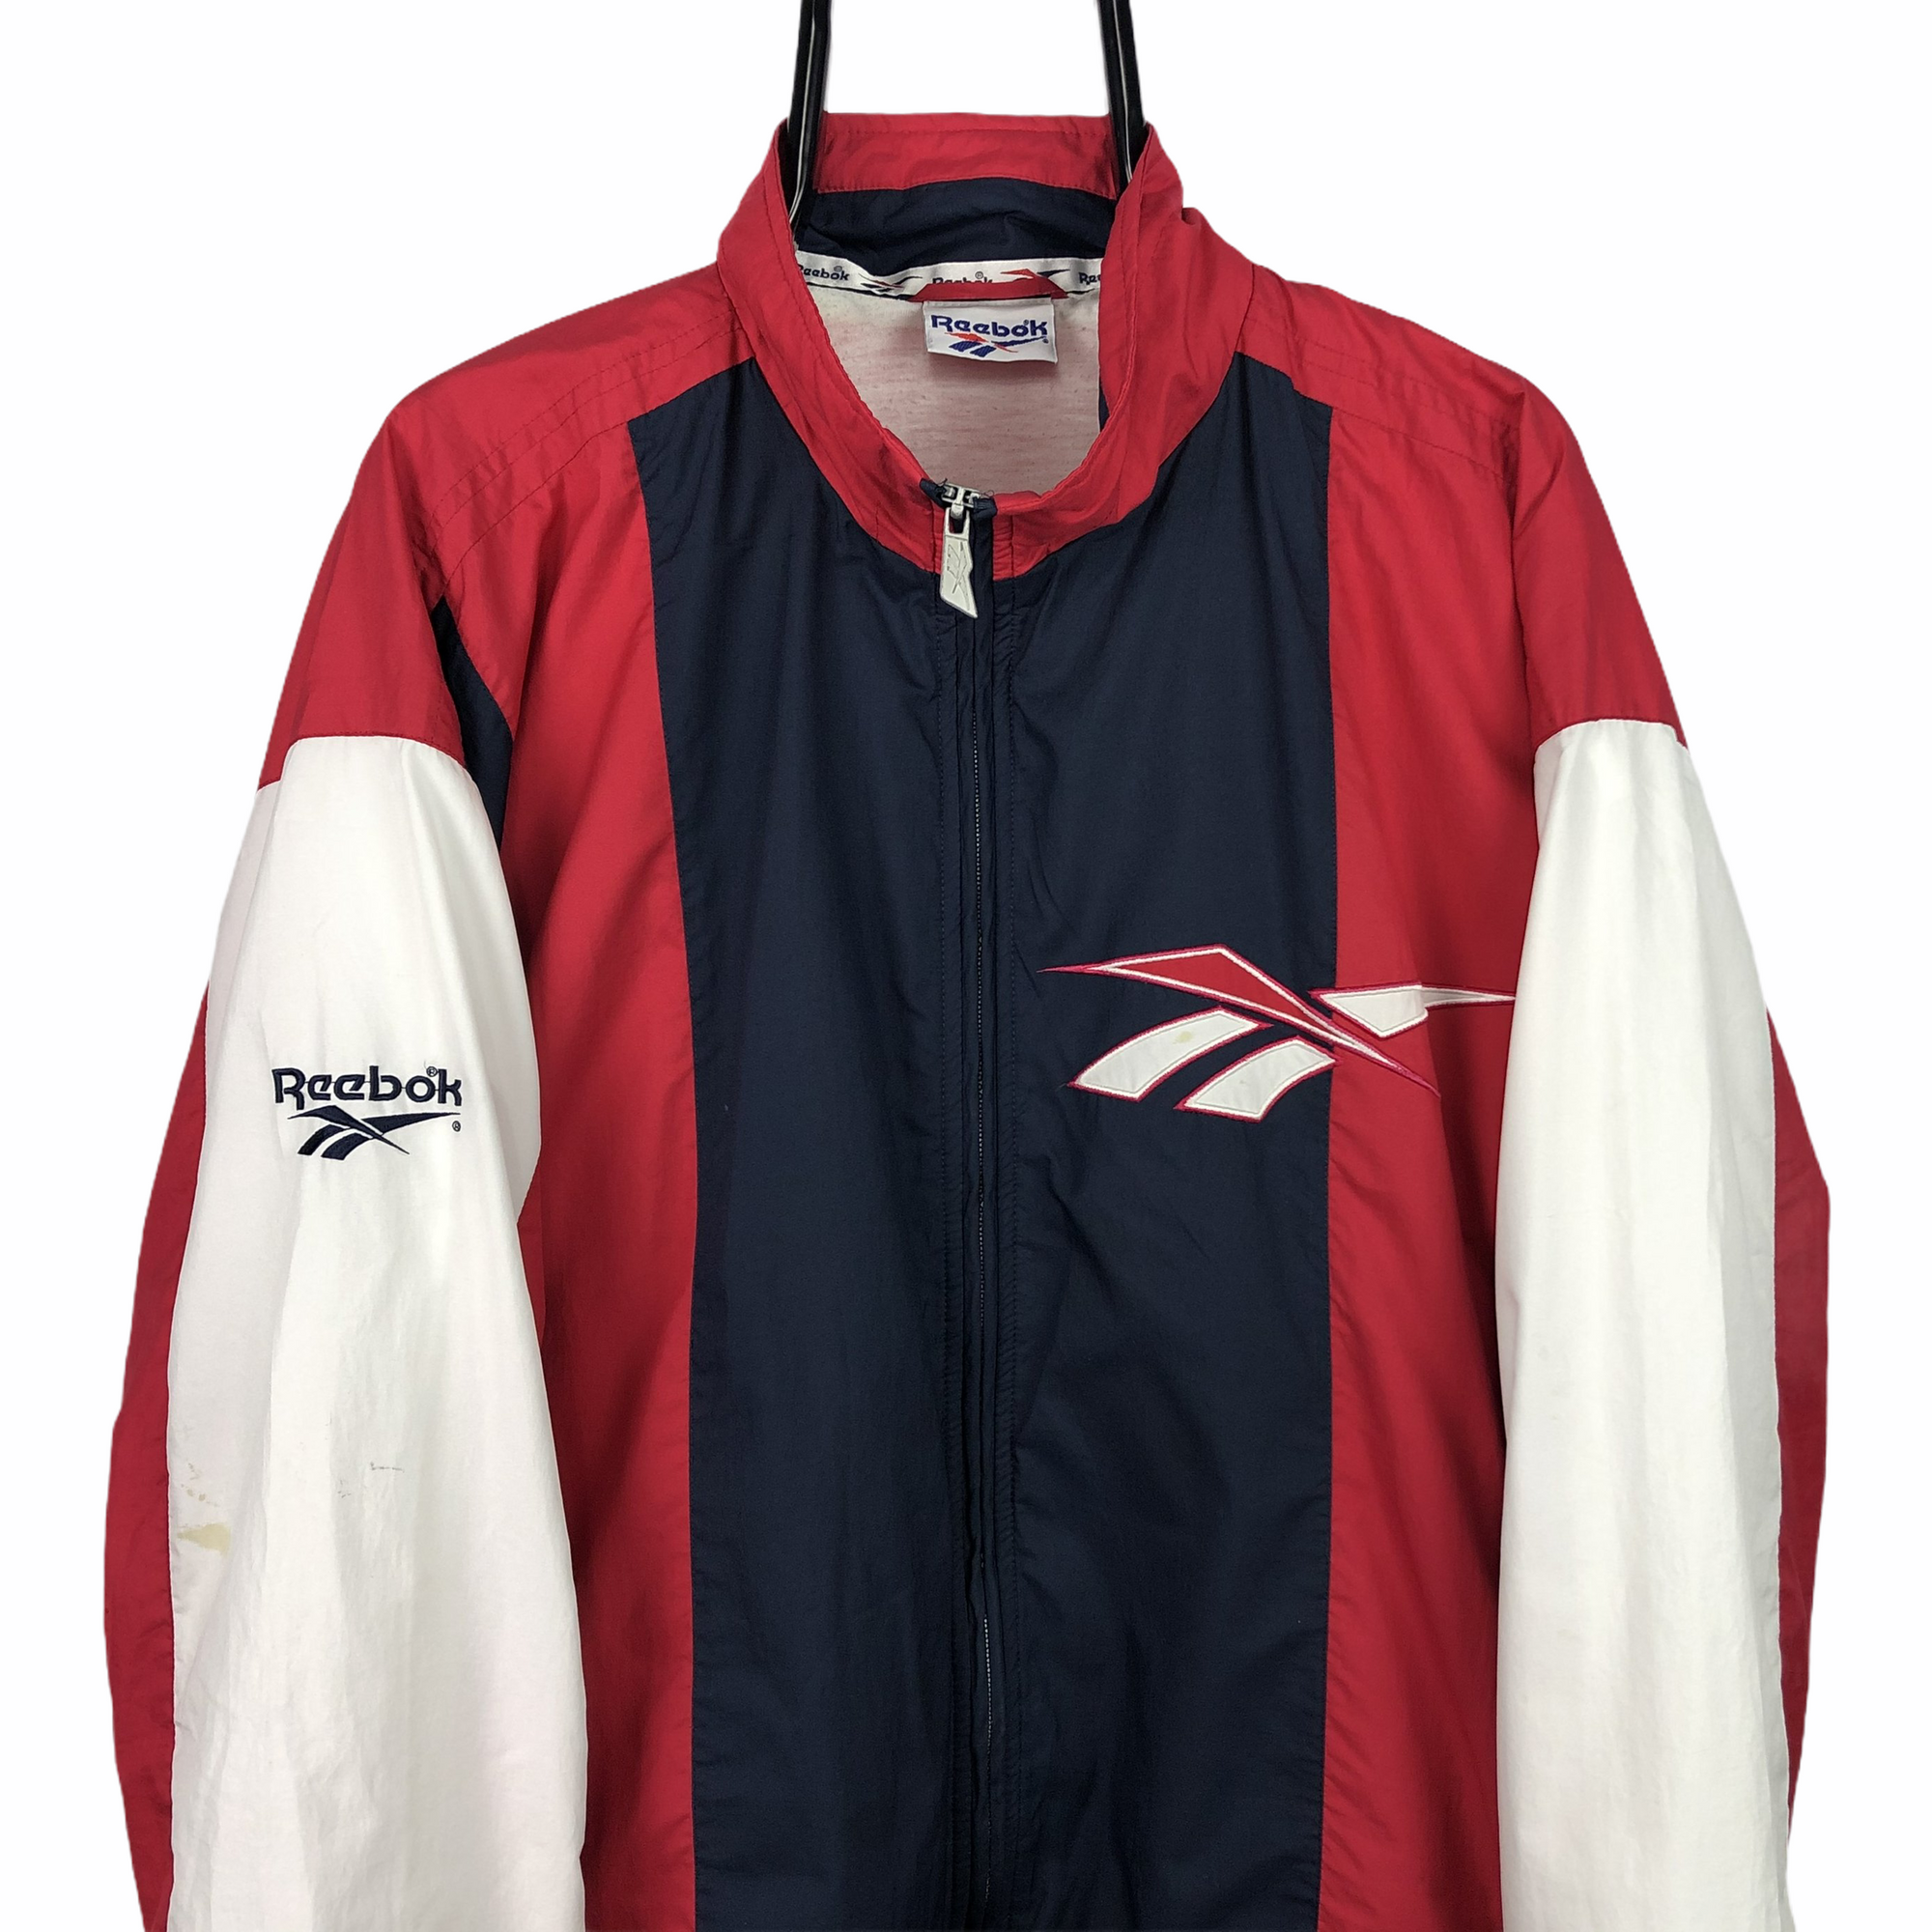 Vintage 90s Reebok Track Jacket in Red/White/Navy - Men's Large/Women's XL